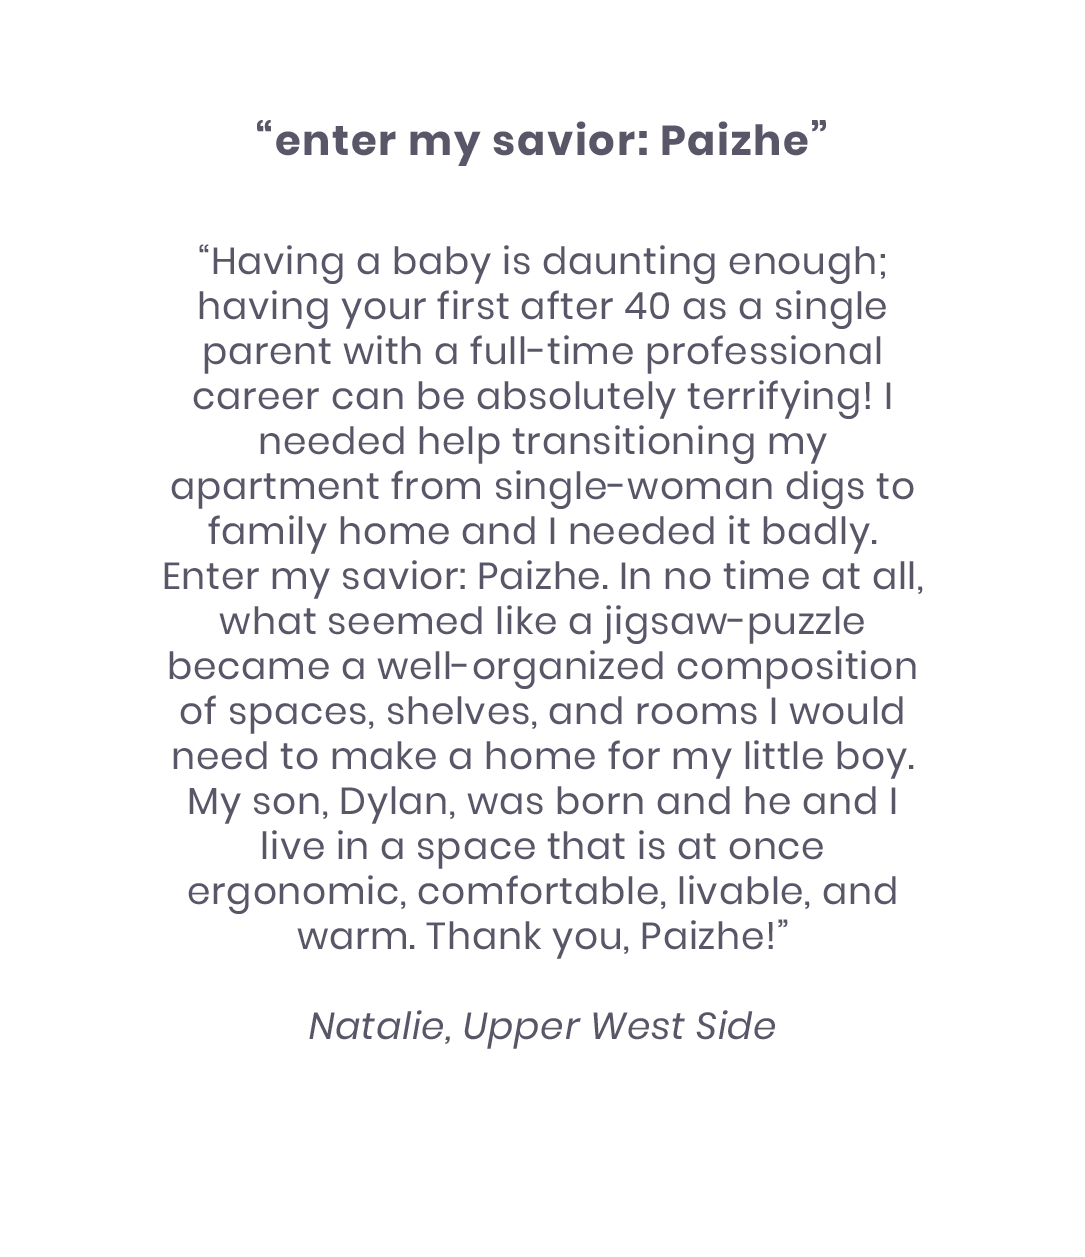 Enter my savior: Paizhe